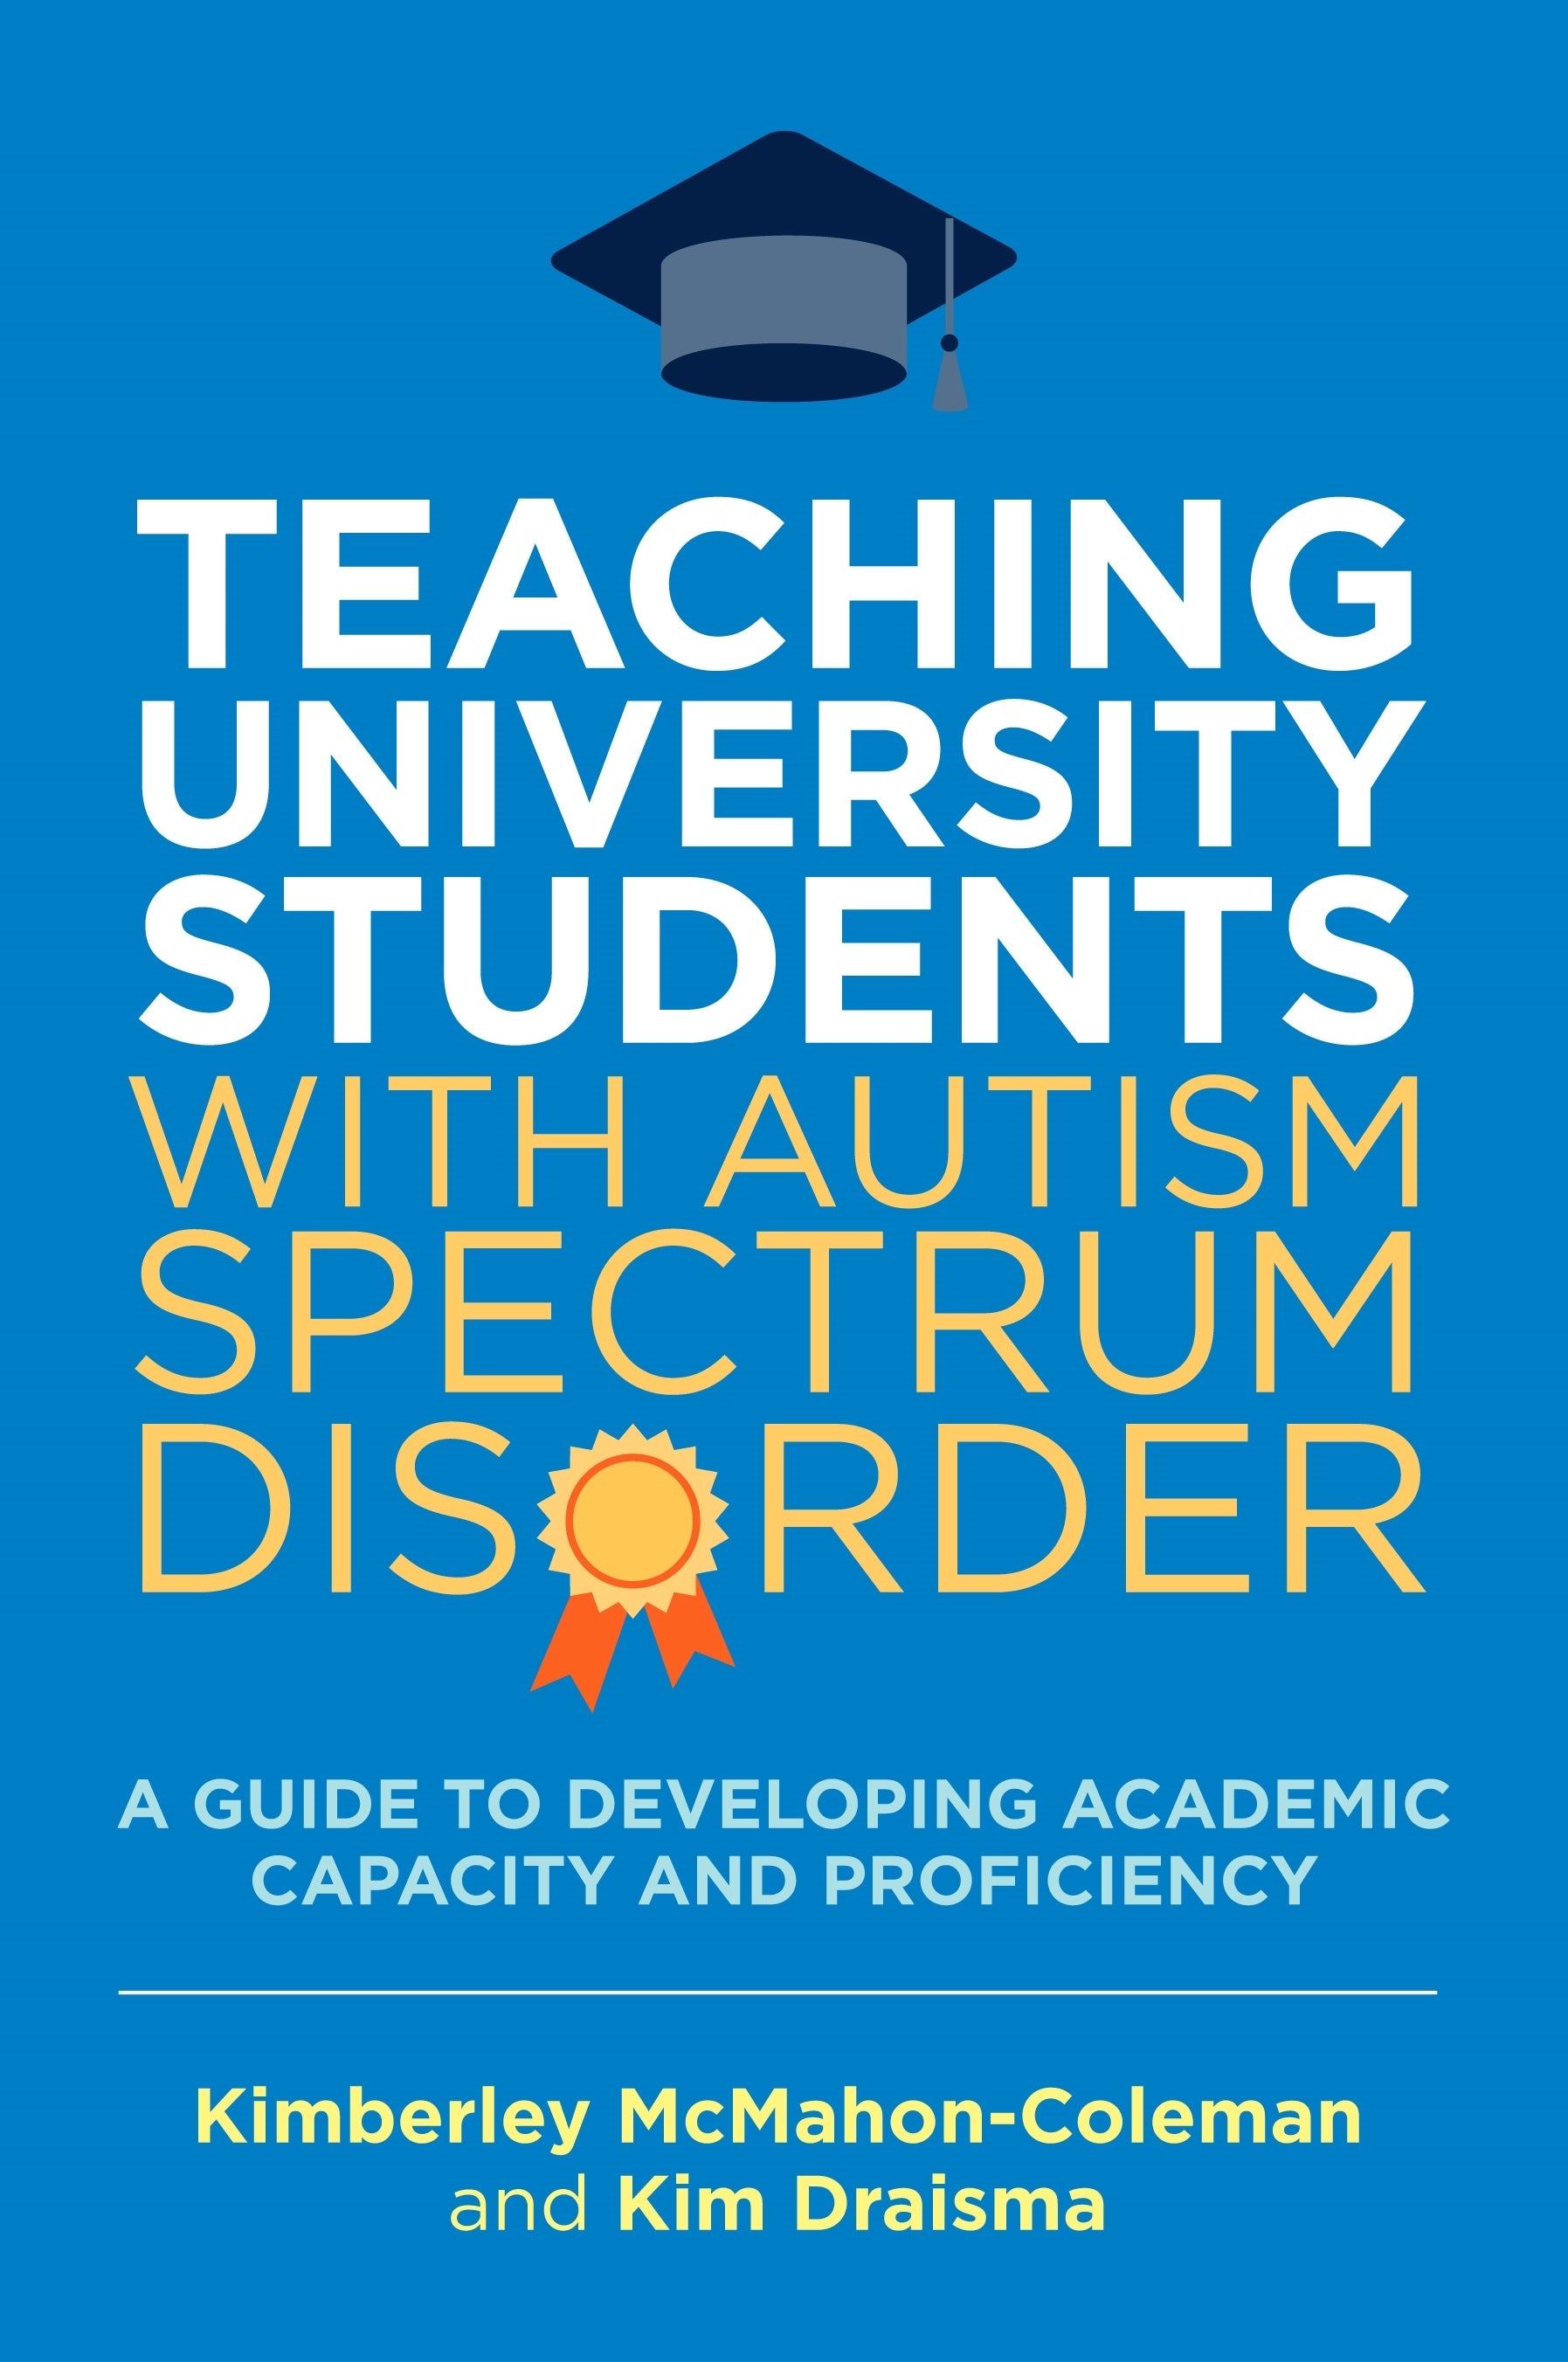 Teaching University Students with Autism Spectrum Disorder by Kim Draisma, Kimberley McMahon-Coleman